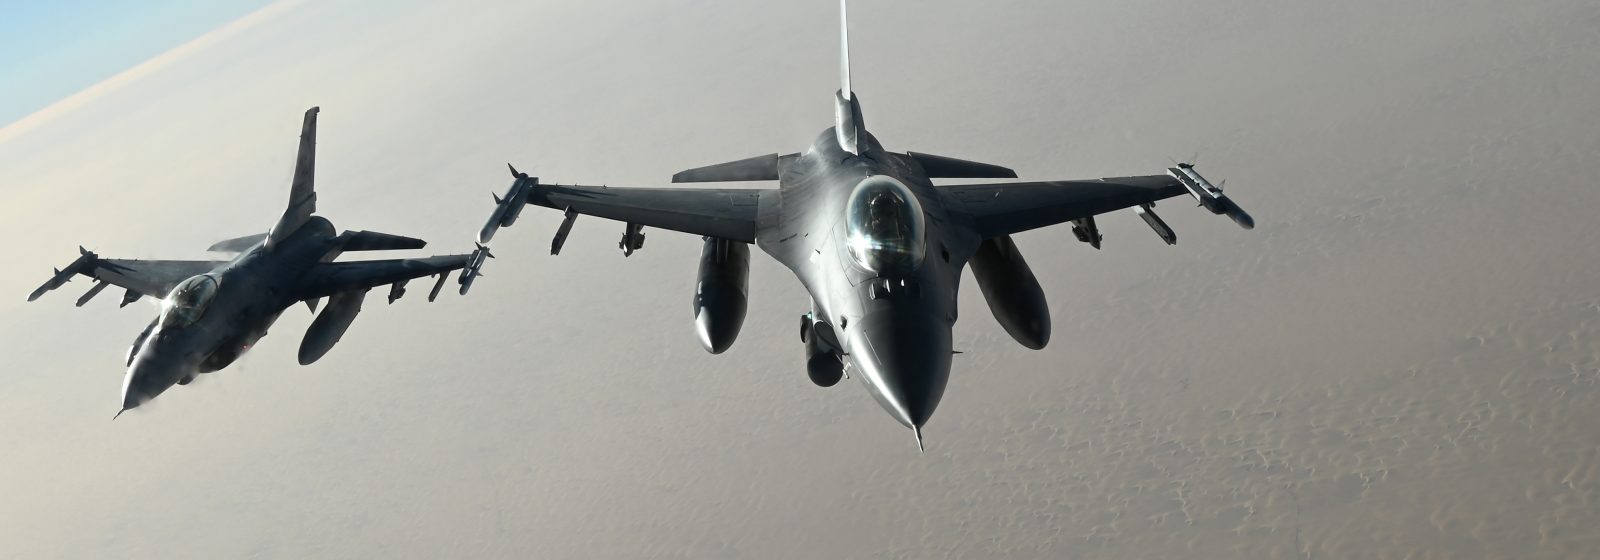 US Air Force F-16 Fighting Falcons gevechtsvliegtuigen